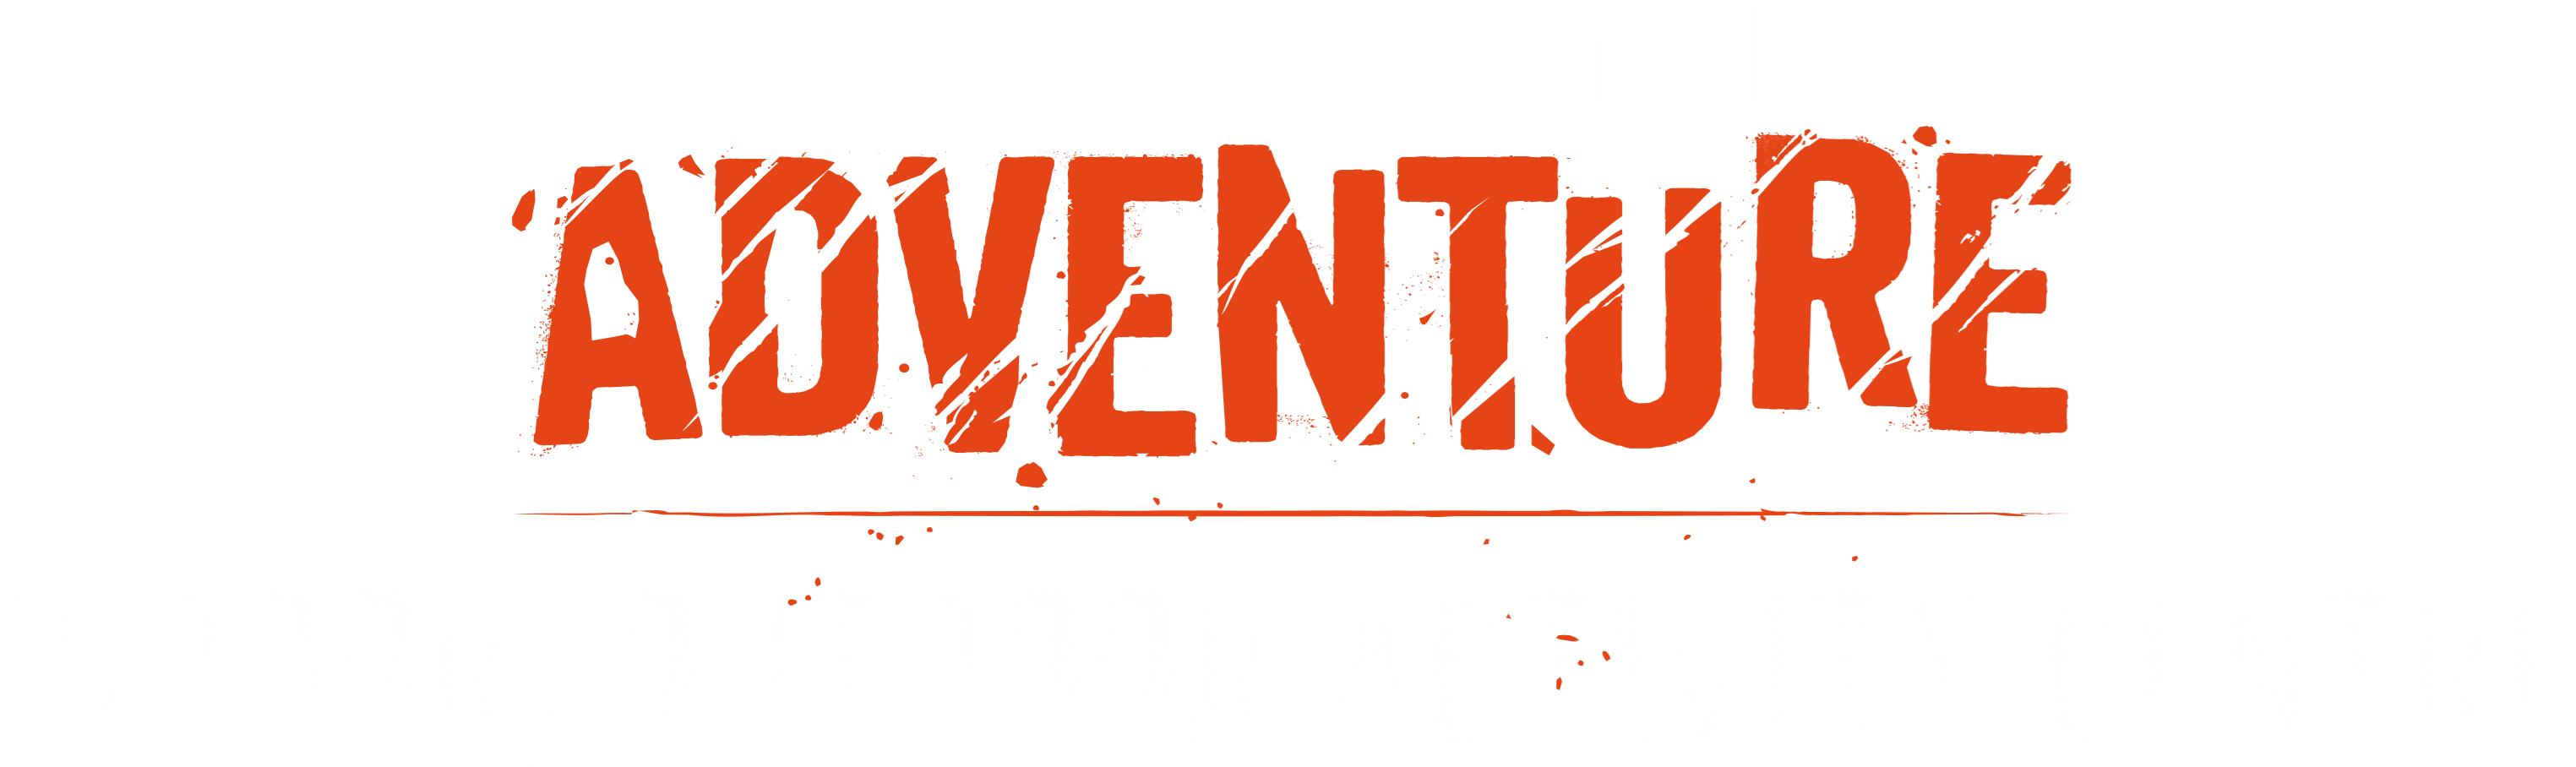 Bear Grylls Logo Strapline